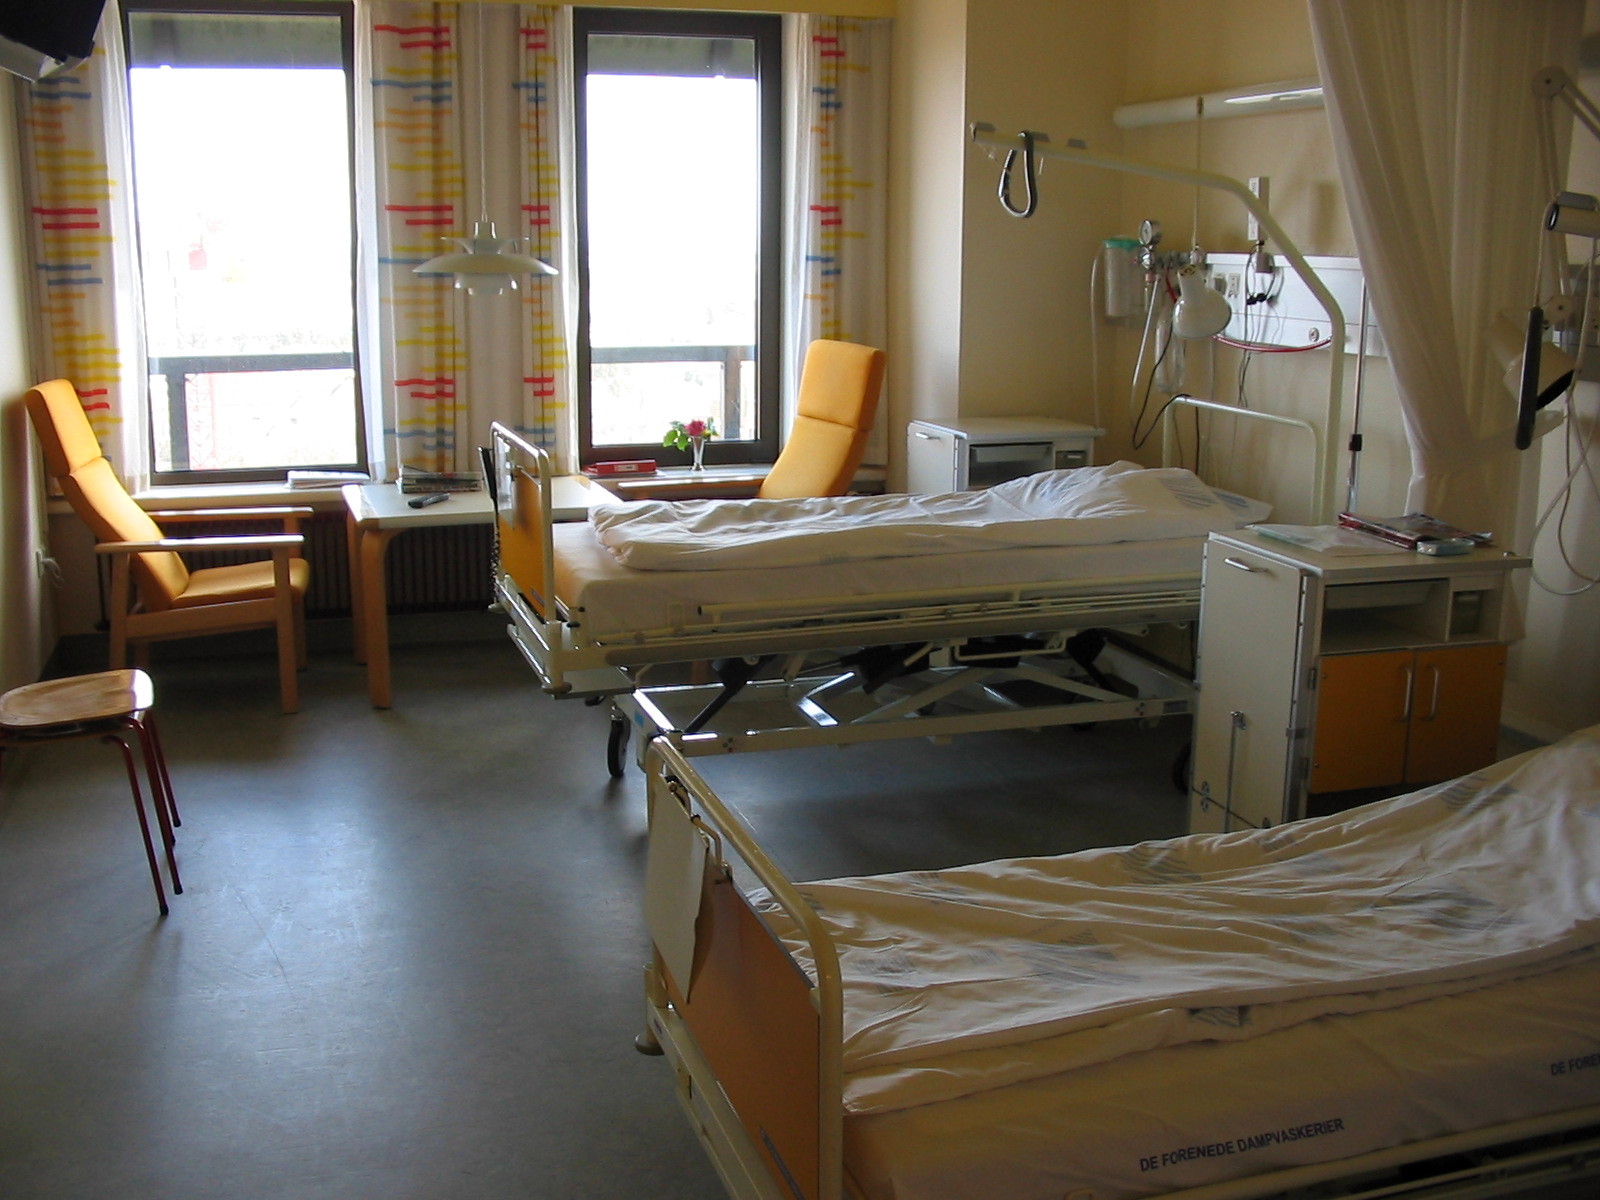 Hospital_room_ubt